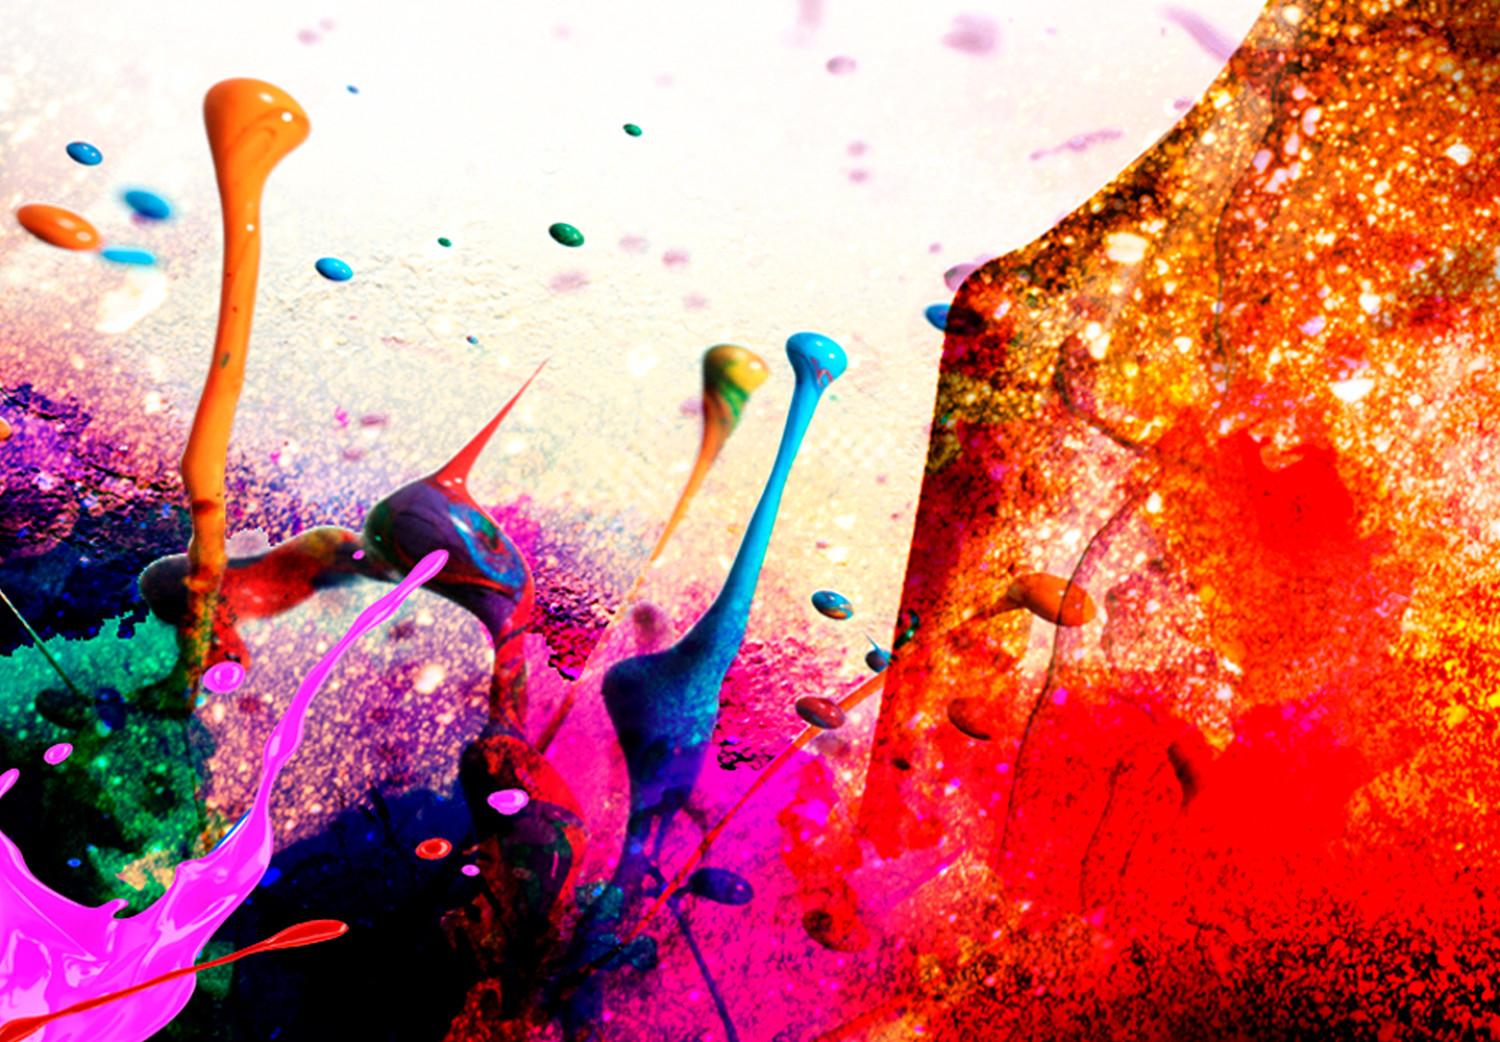 Cuadro moderno Semental alegre (1 pieza) ancho - animal colorido abstracto